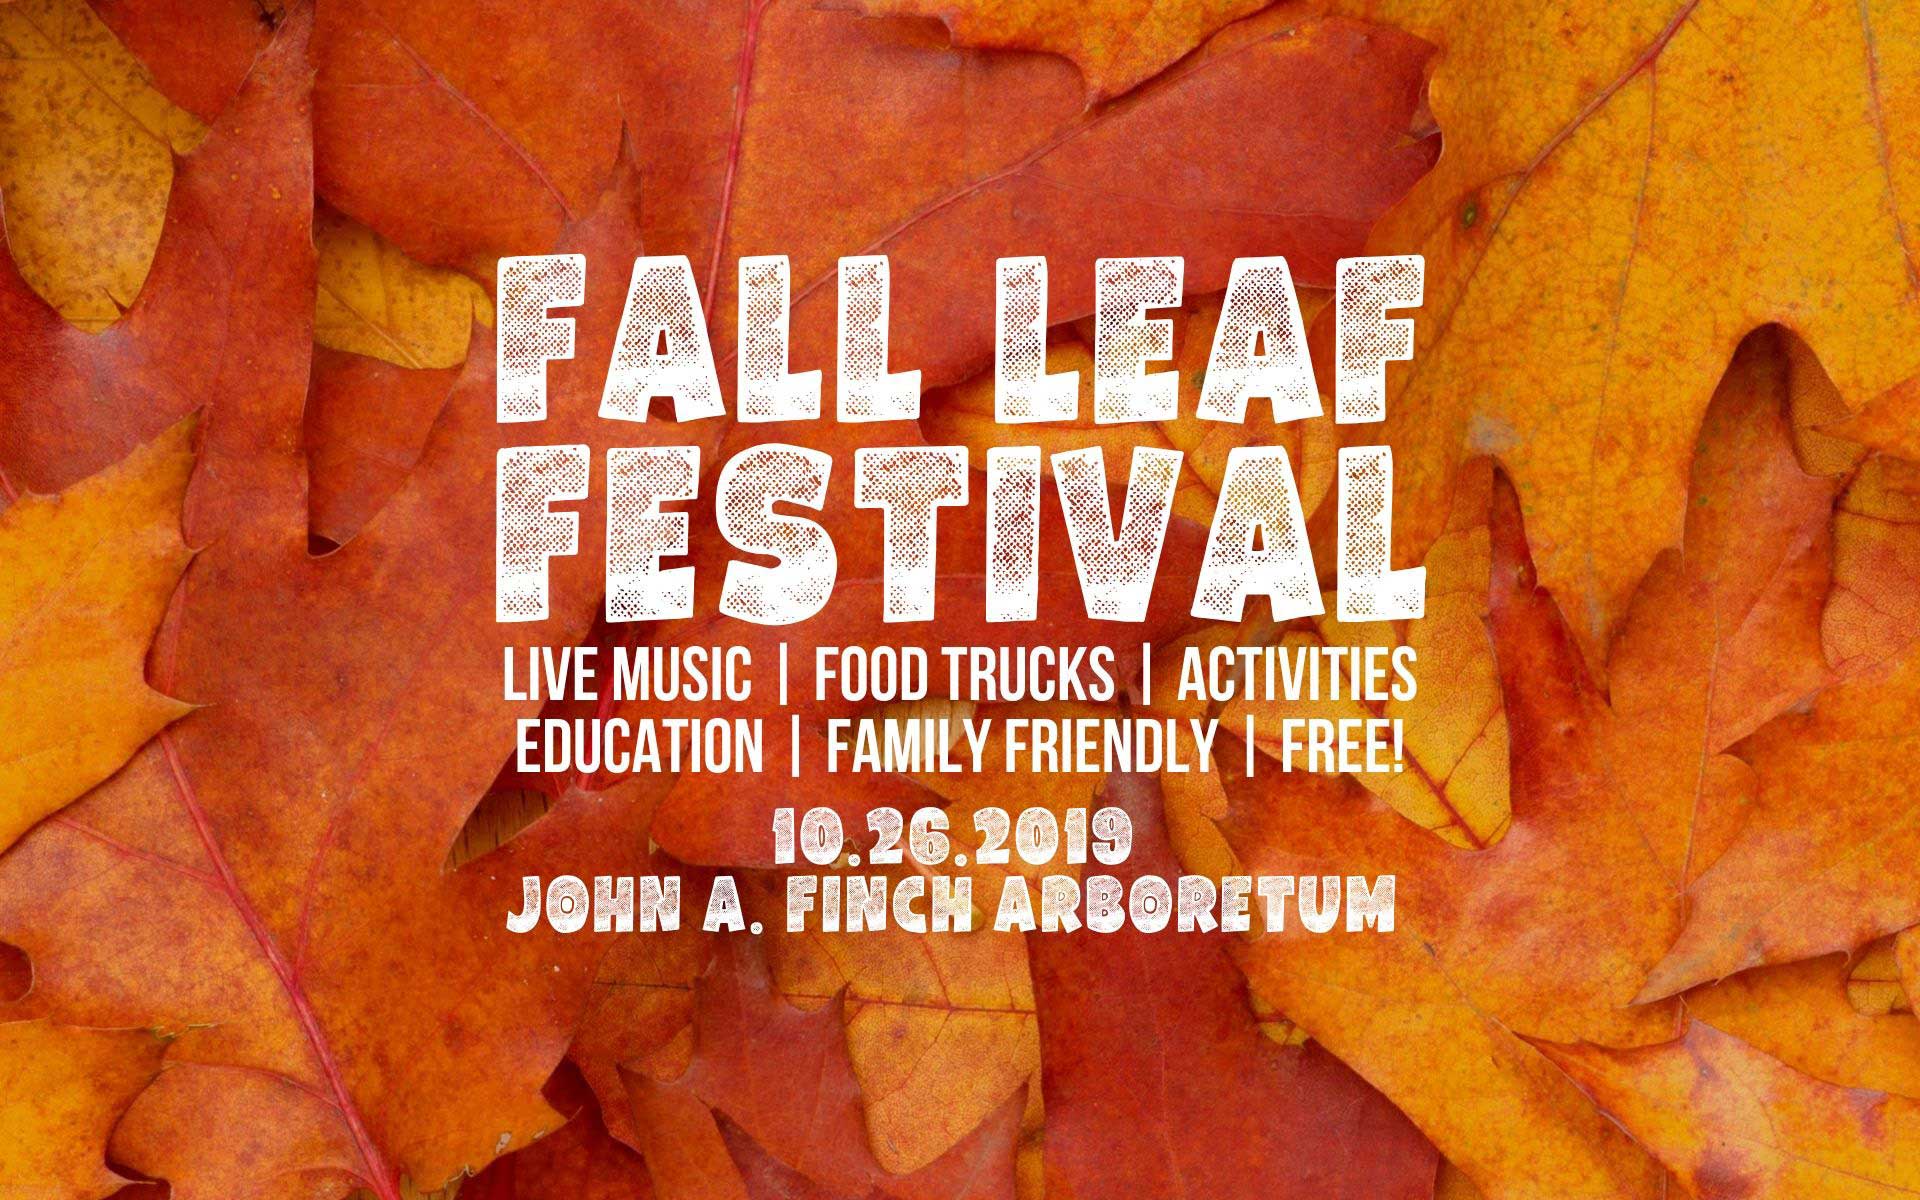 Fall Leaf Festival Returns to Finch Arboretum City of Spokane, Washington